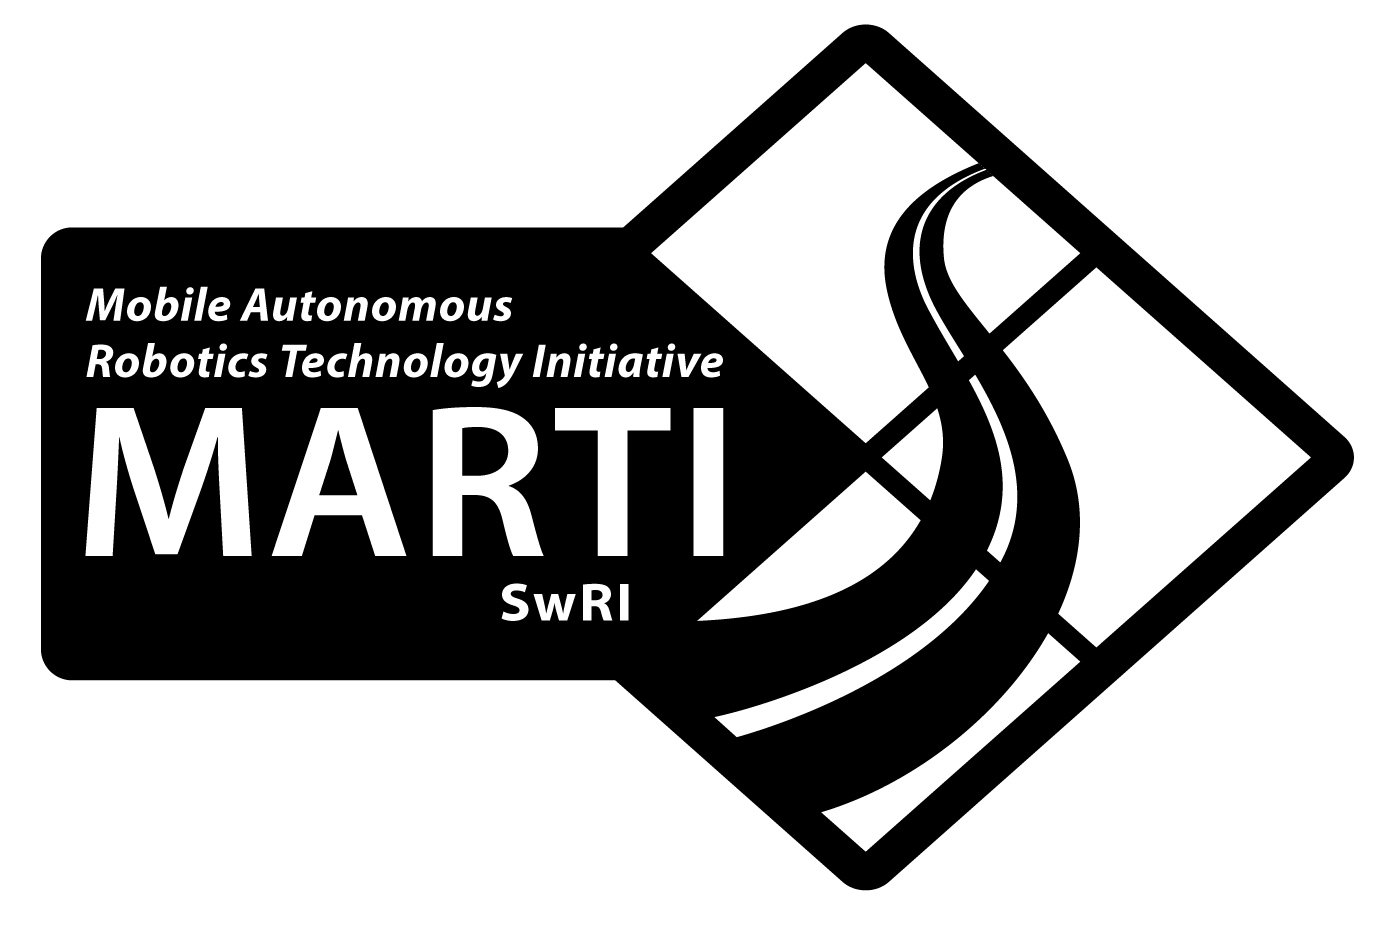  MOBILE AUTONOMOUS ROBOTICS TECHNOLOGY INITIATIVE MARTI SWRI